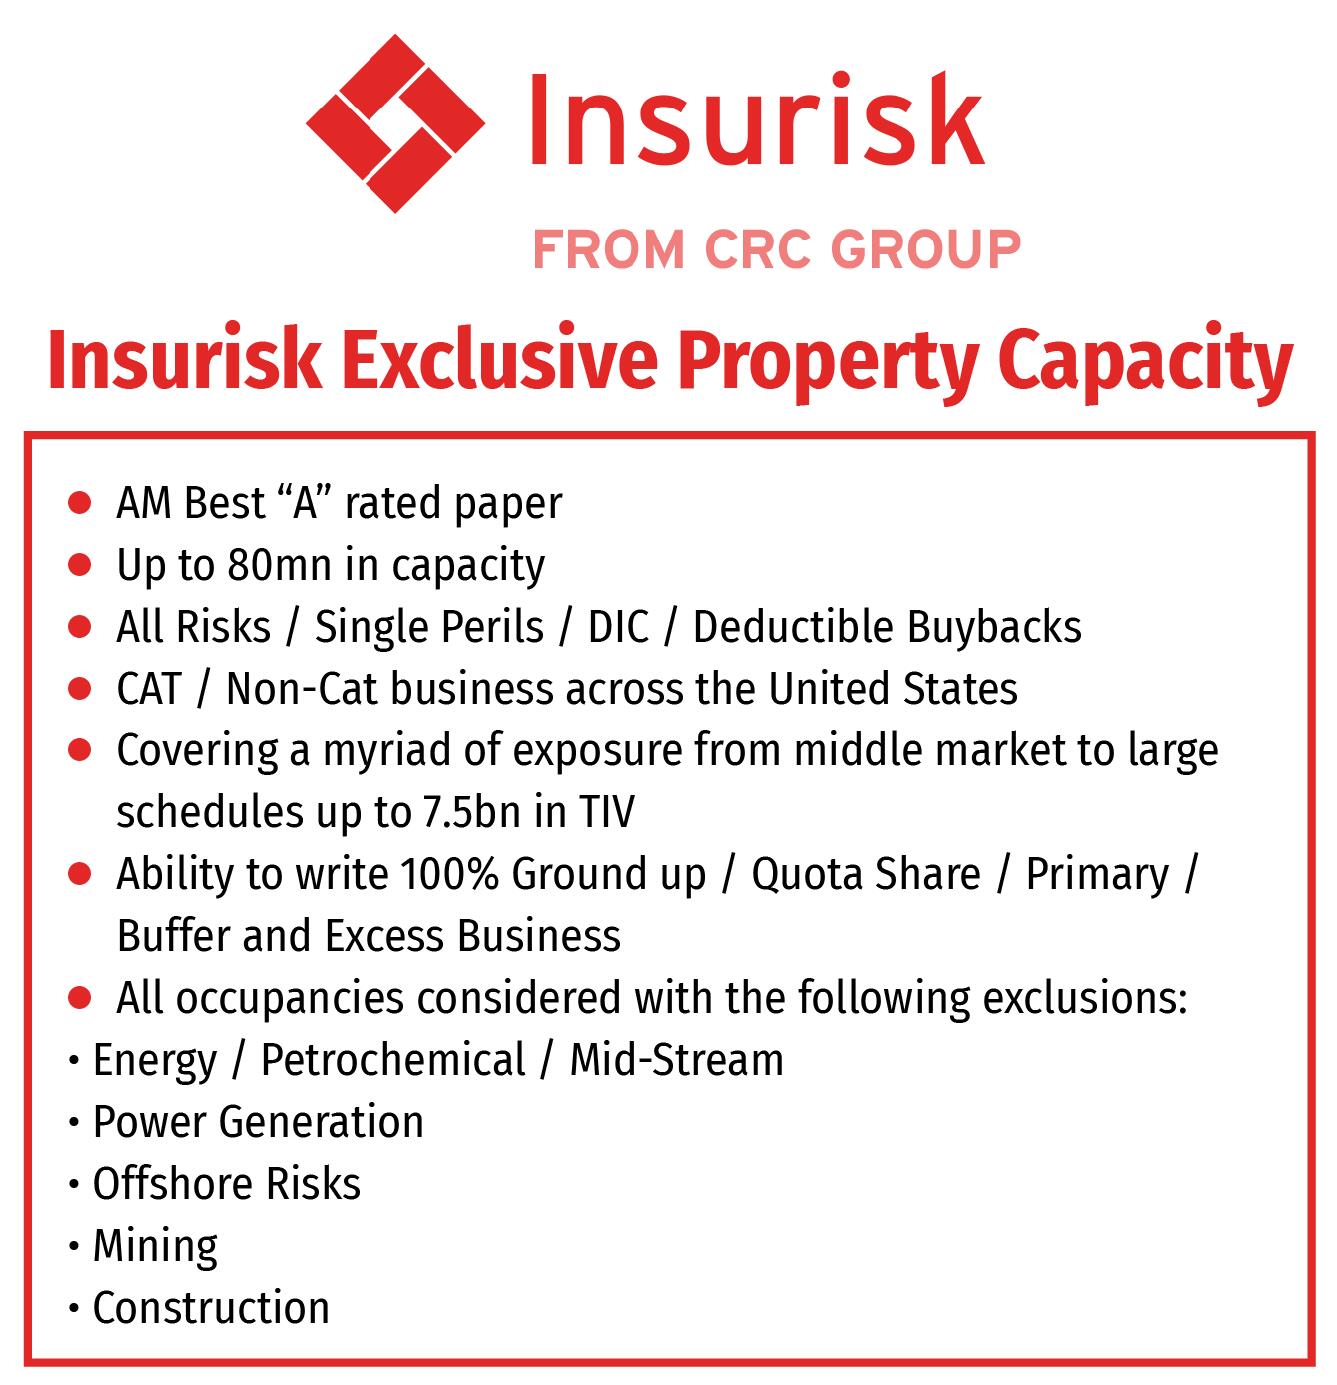 Insurisk Exclusive Property Capacity